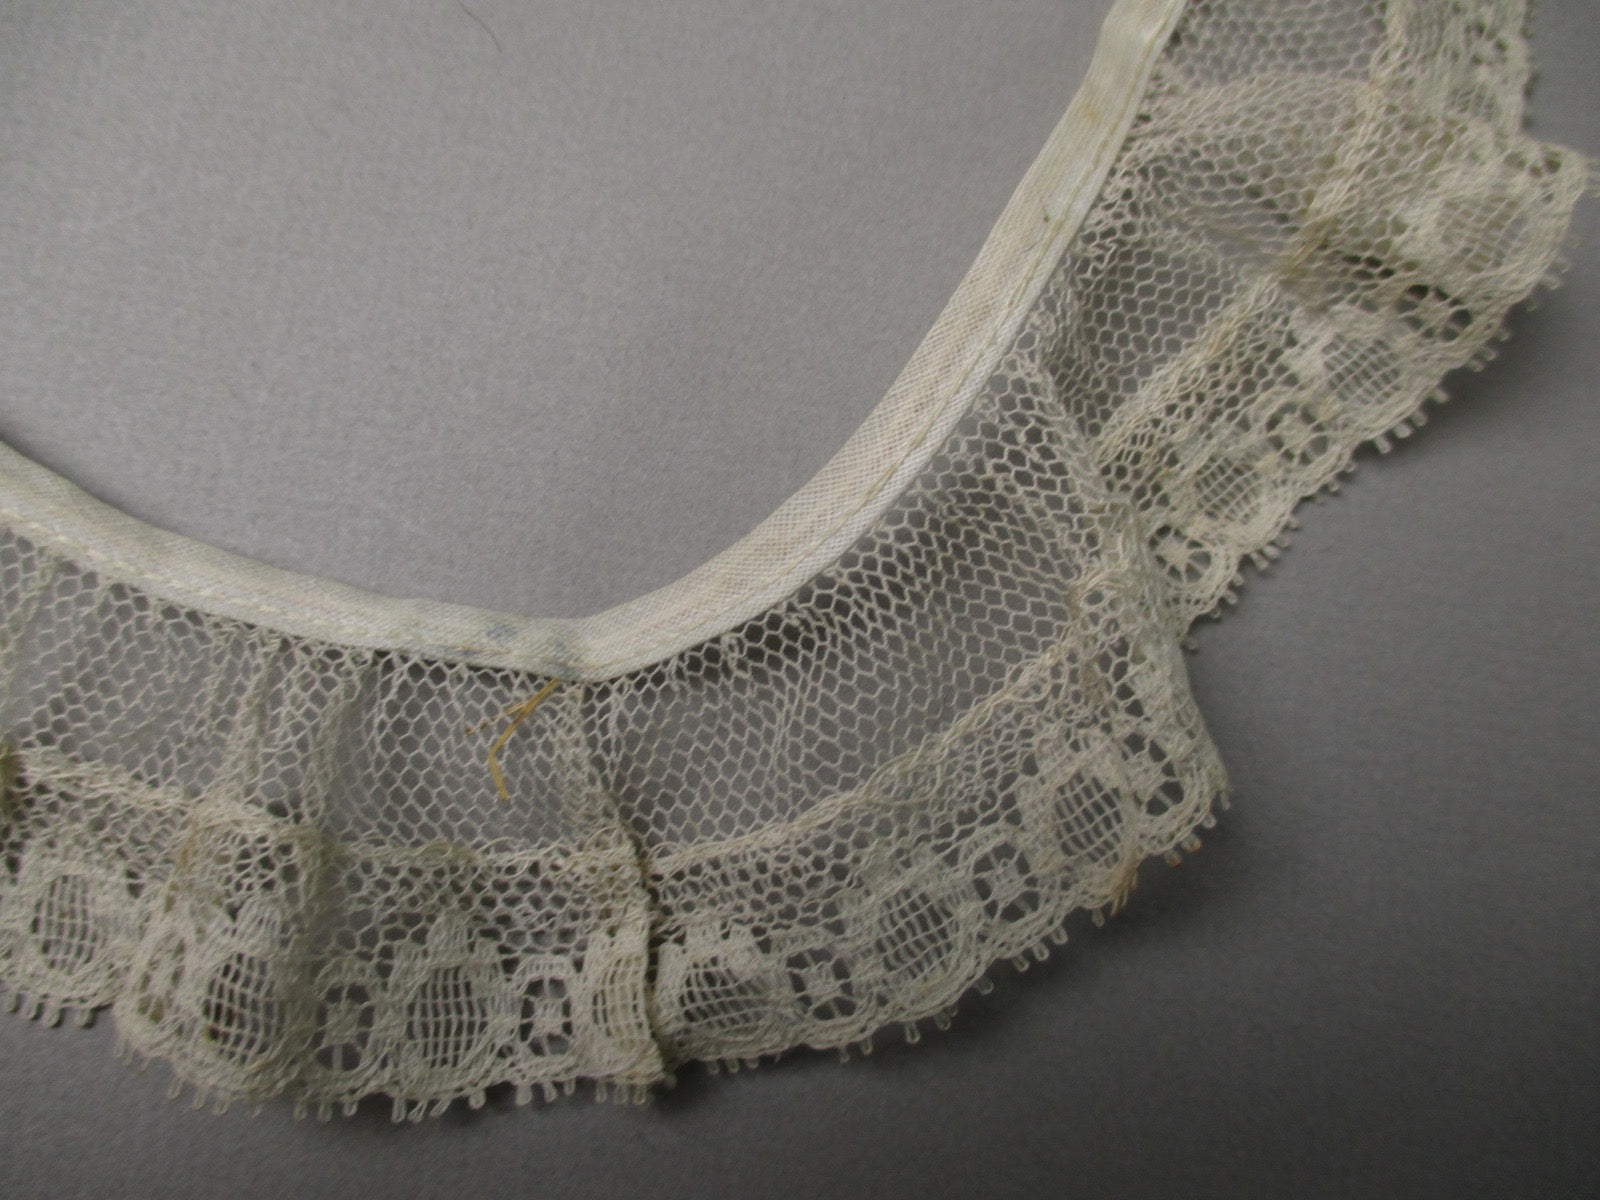 Antique lace Victorian round collar